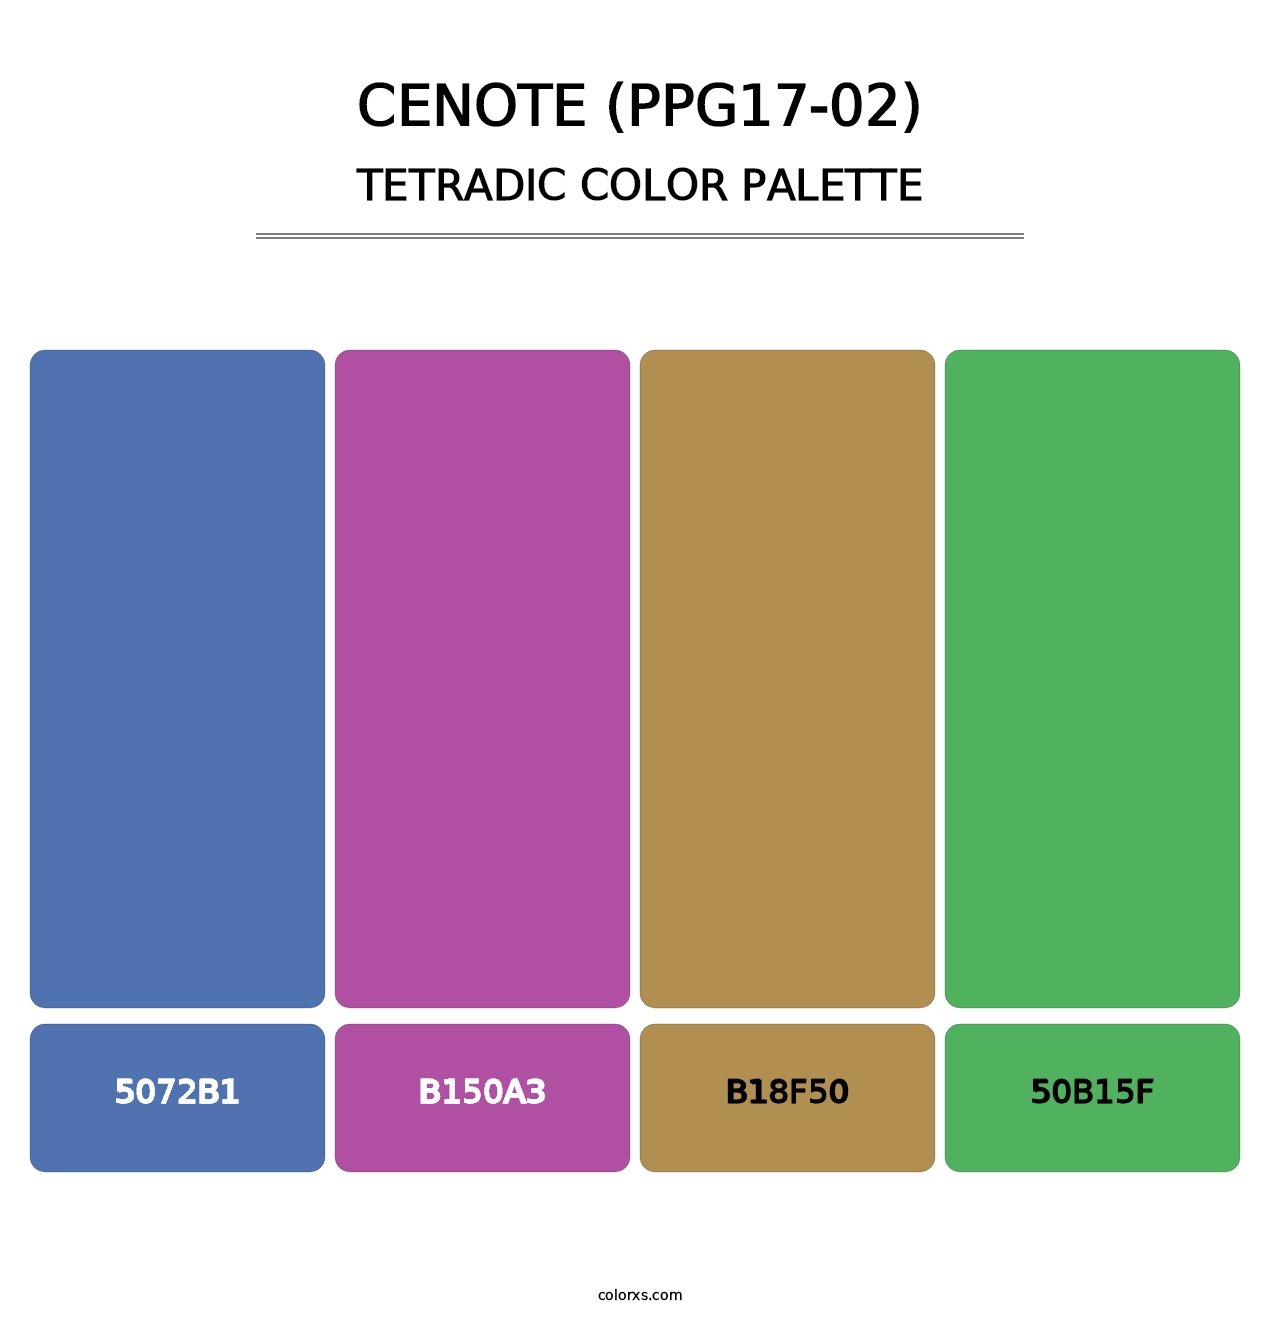 Cenote (PPG17-02) - Tetradic Color Palette